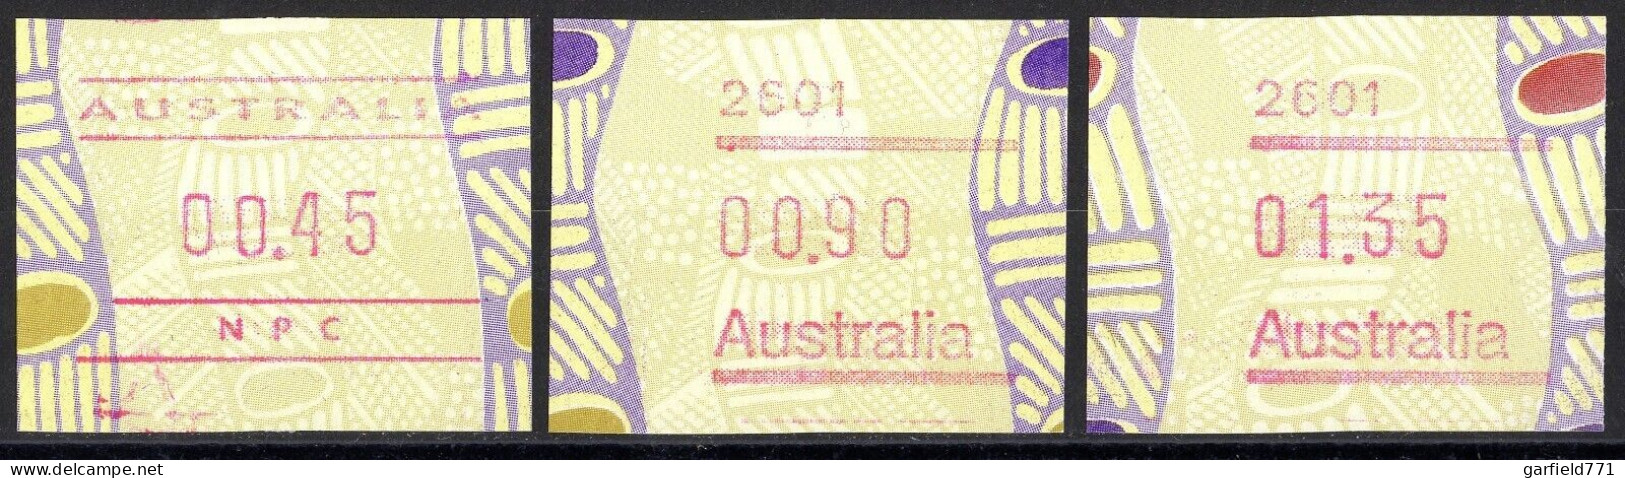 AUSTRALIE AUSTRALIA Frama 1999 Tiwi Art Button Lot Set Of 3 MINT - Postcode 2601 - Mint Stamps